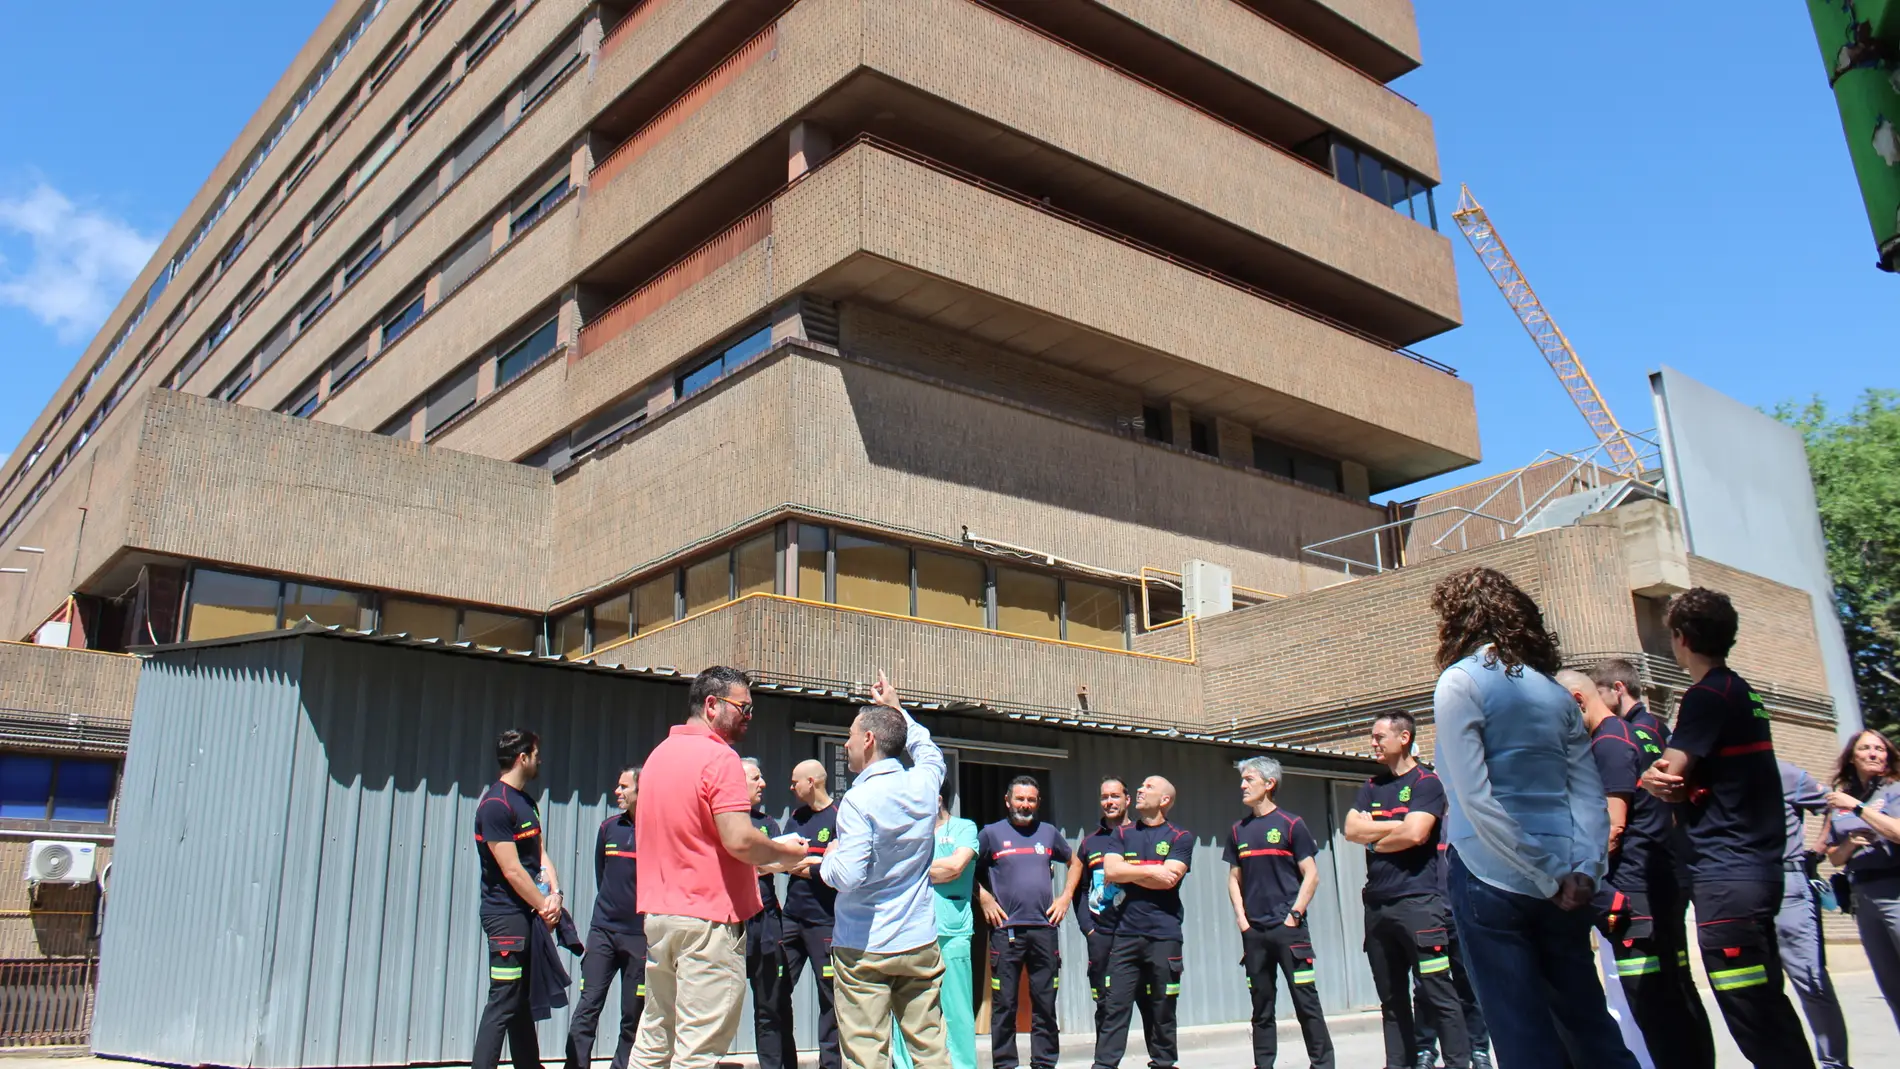 Bomberos de la capital se formar para posibles intervenciones en el Hospital de Albacete